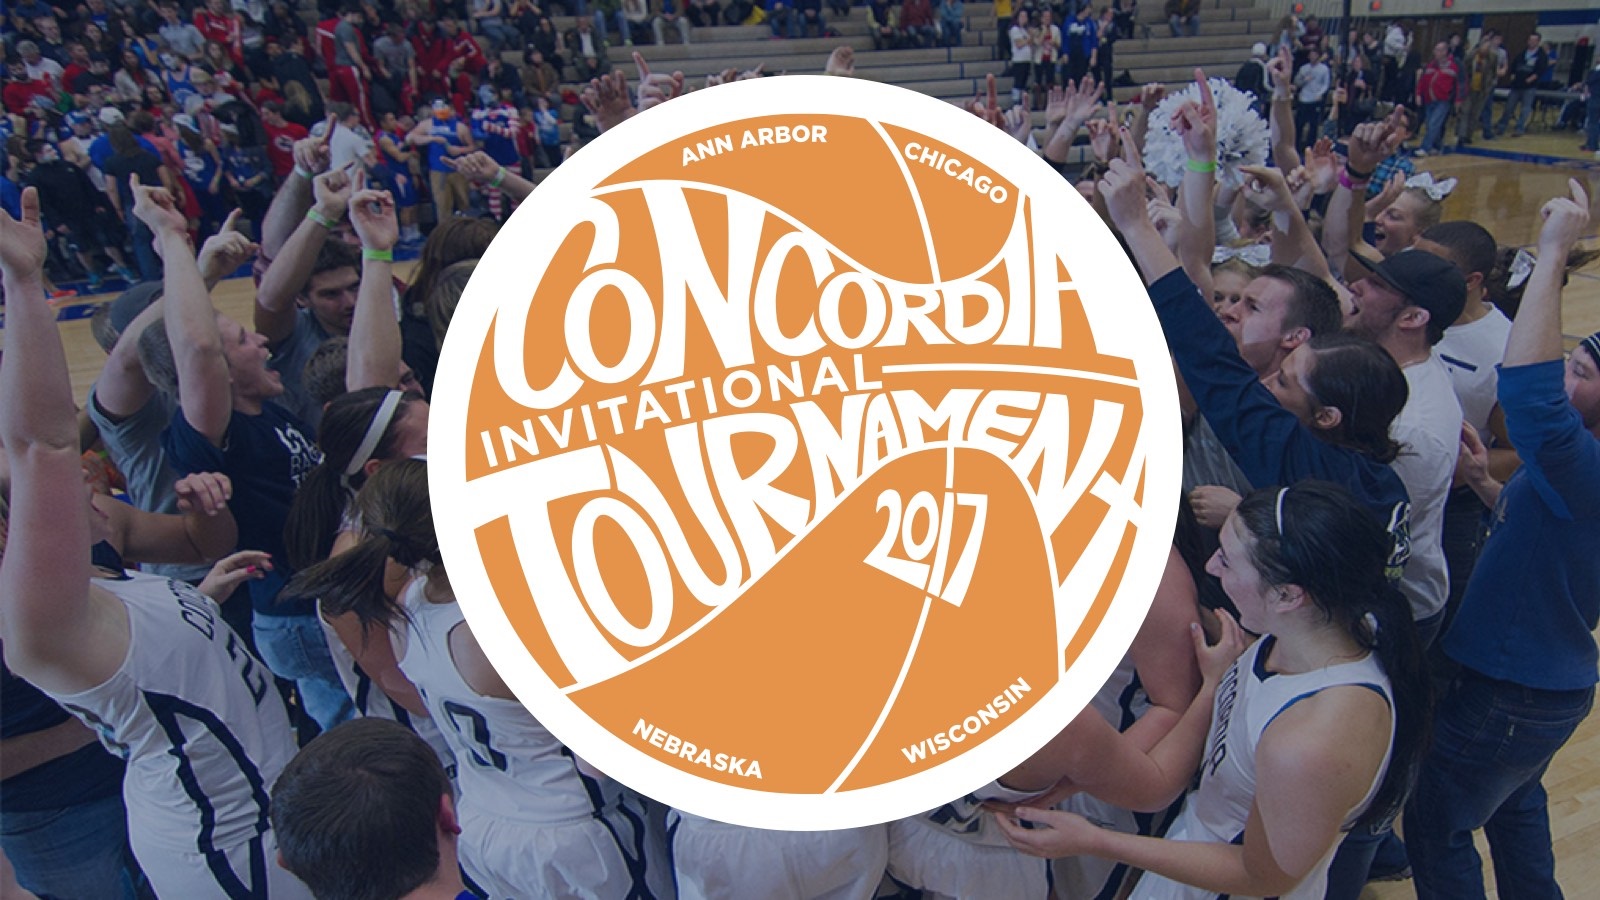 Concordia University, Nebraska to host Concordia Invitational